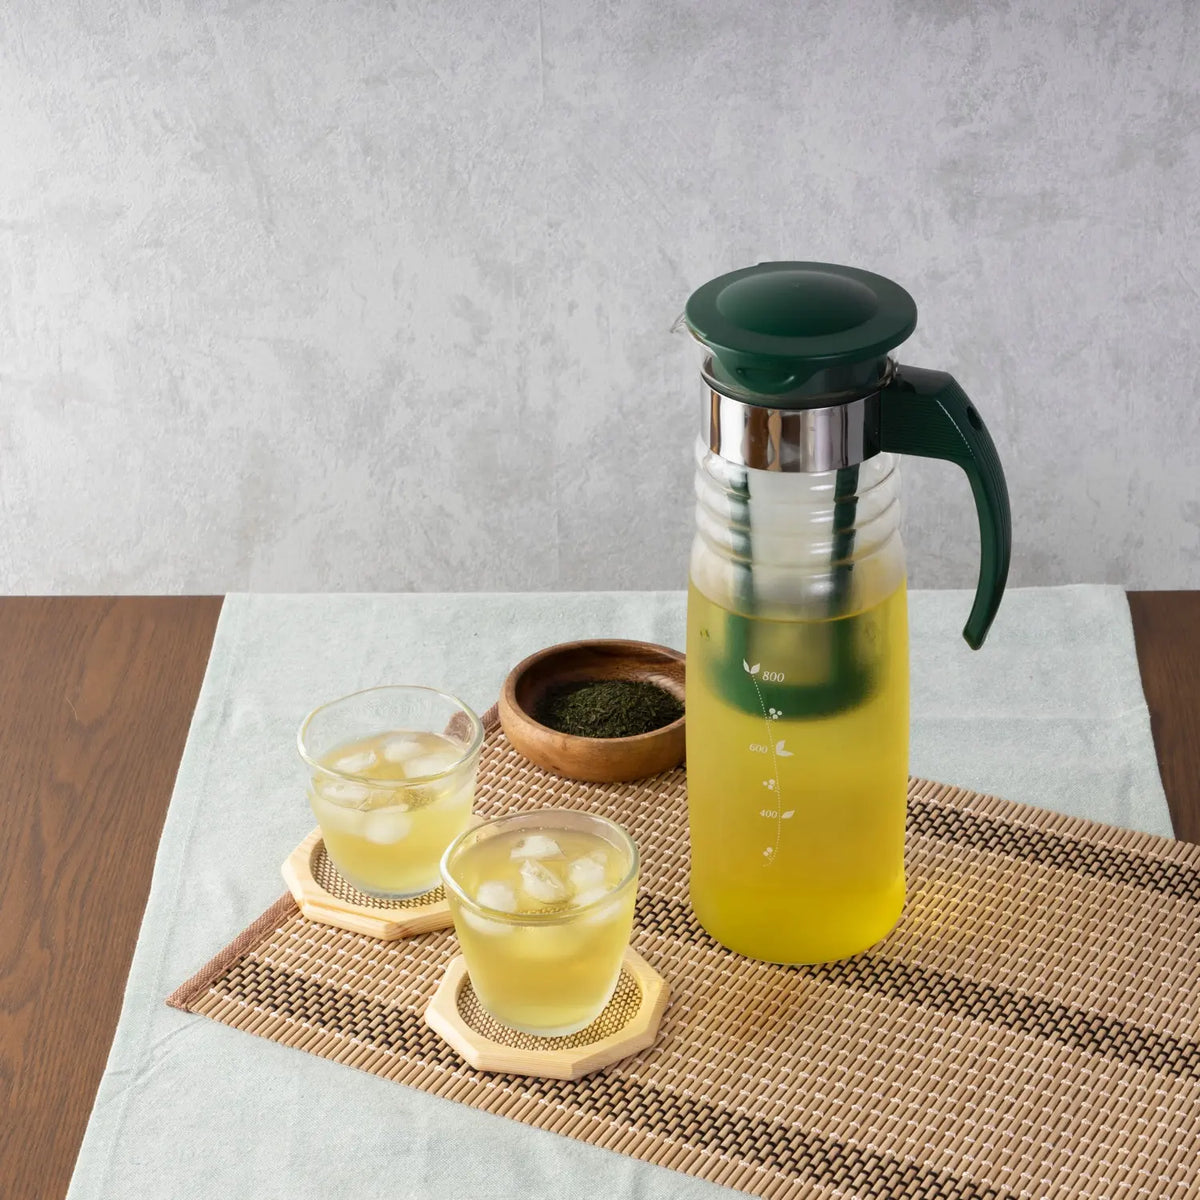 iwaki Heat Resistant Glass Teapot - Globalkitchen Japan